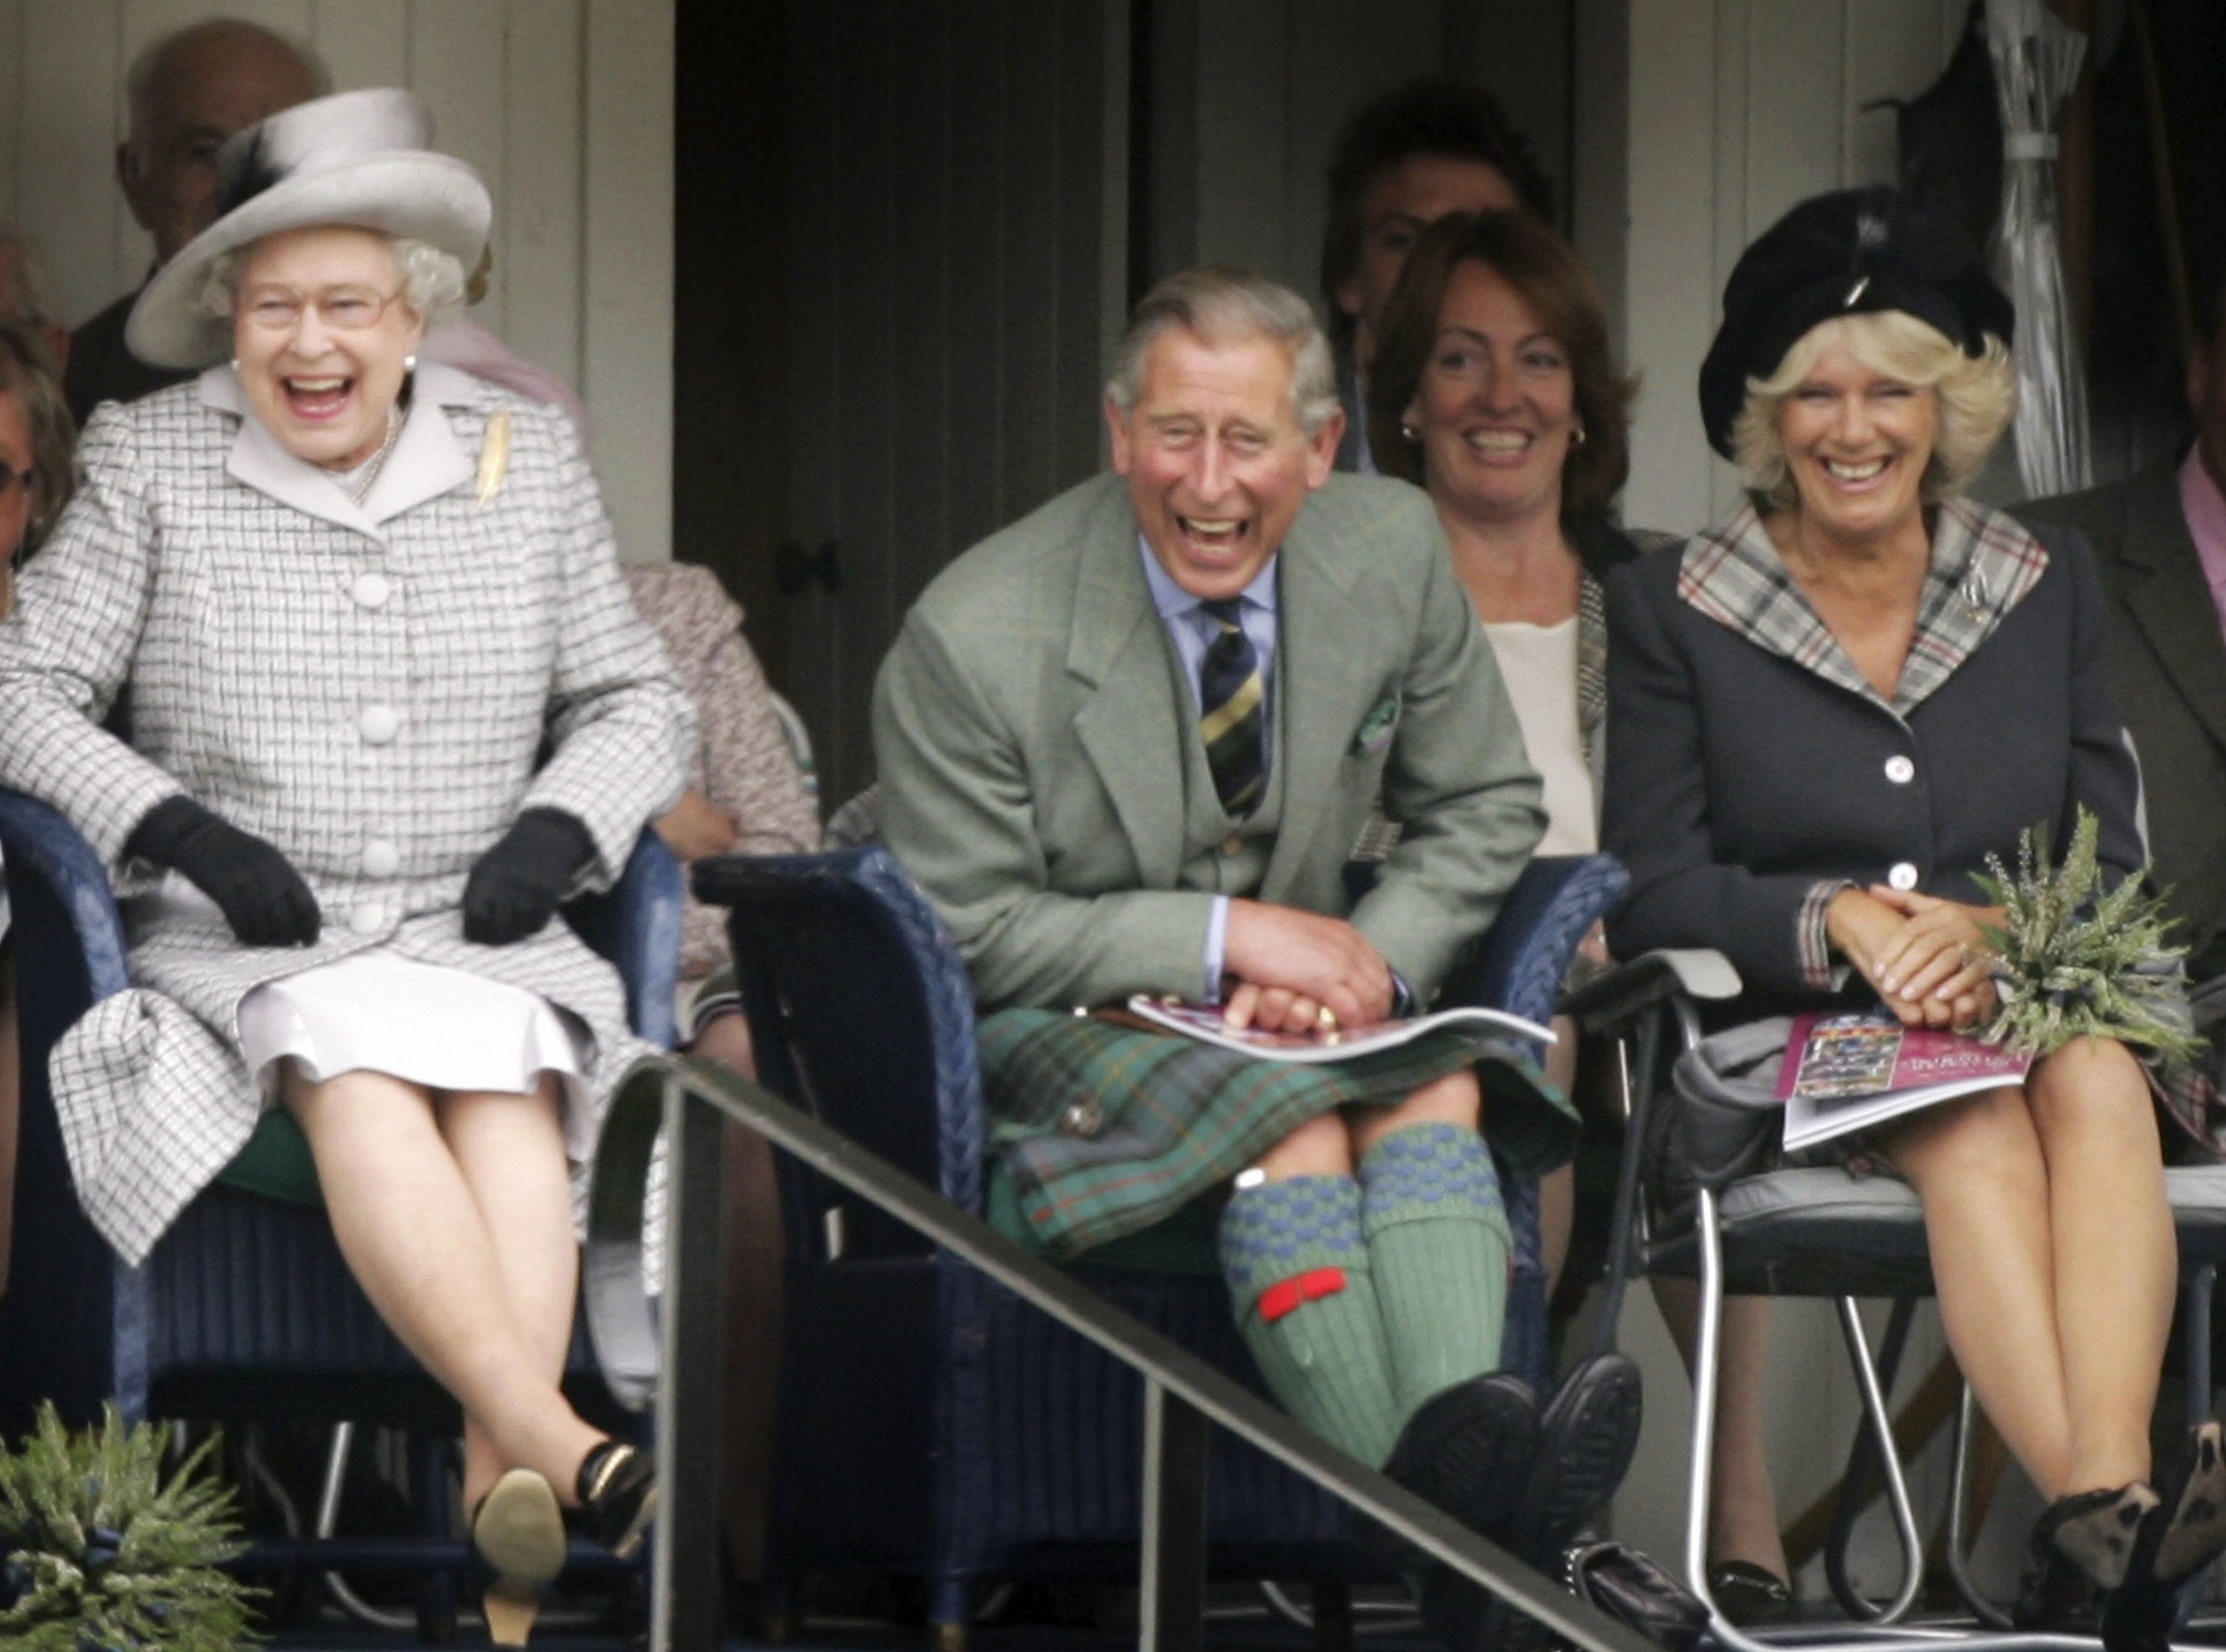 Queen Elizabeth, Prince Charles, and Camilla Parker Bowles